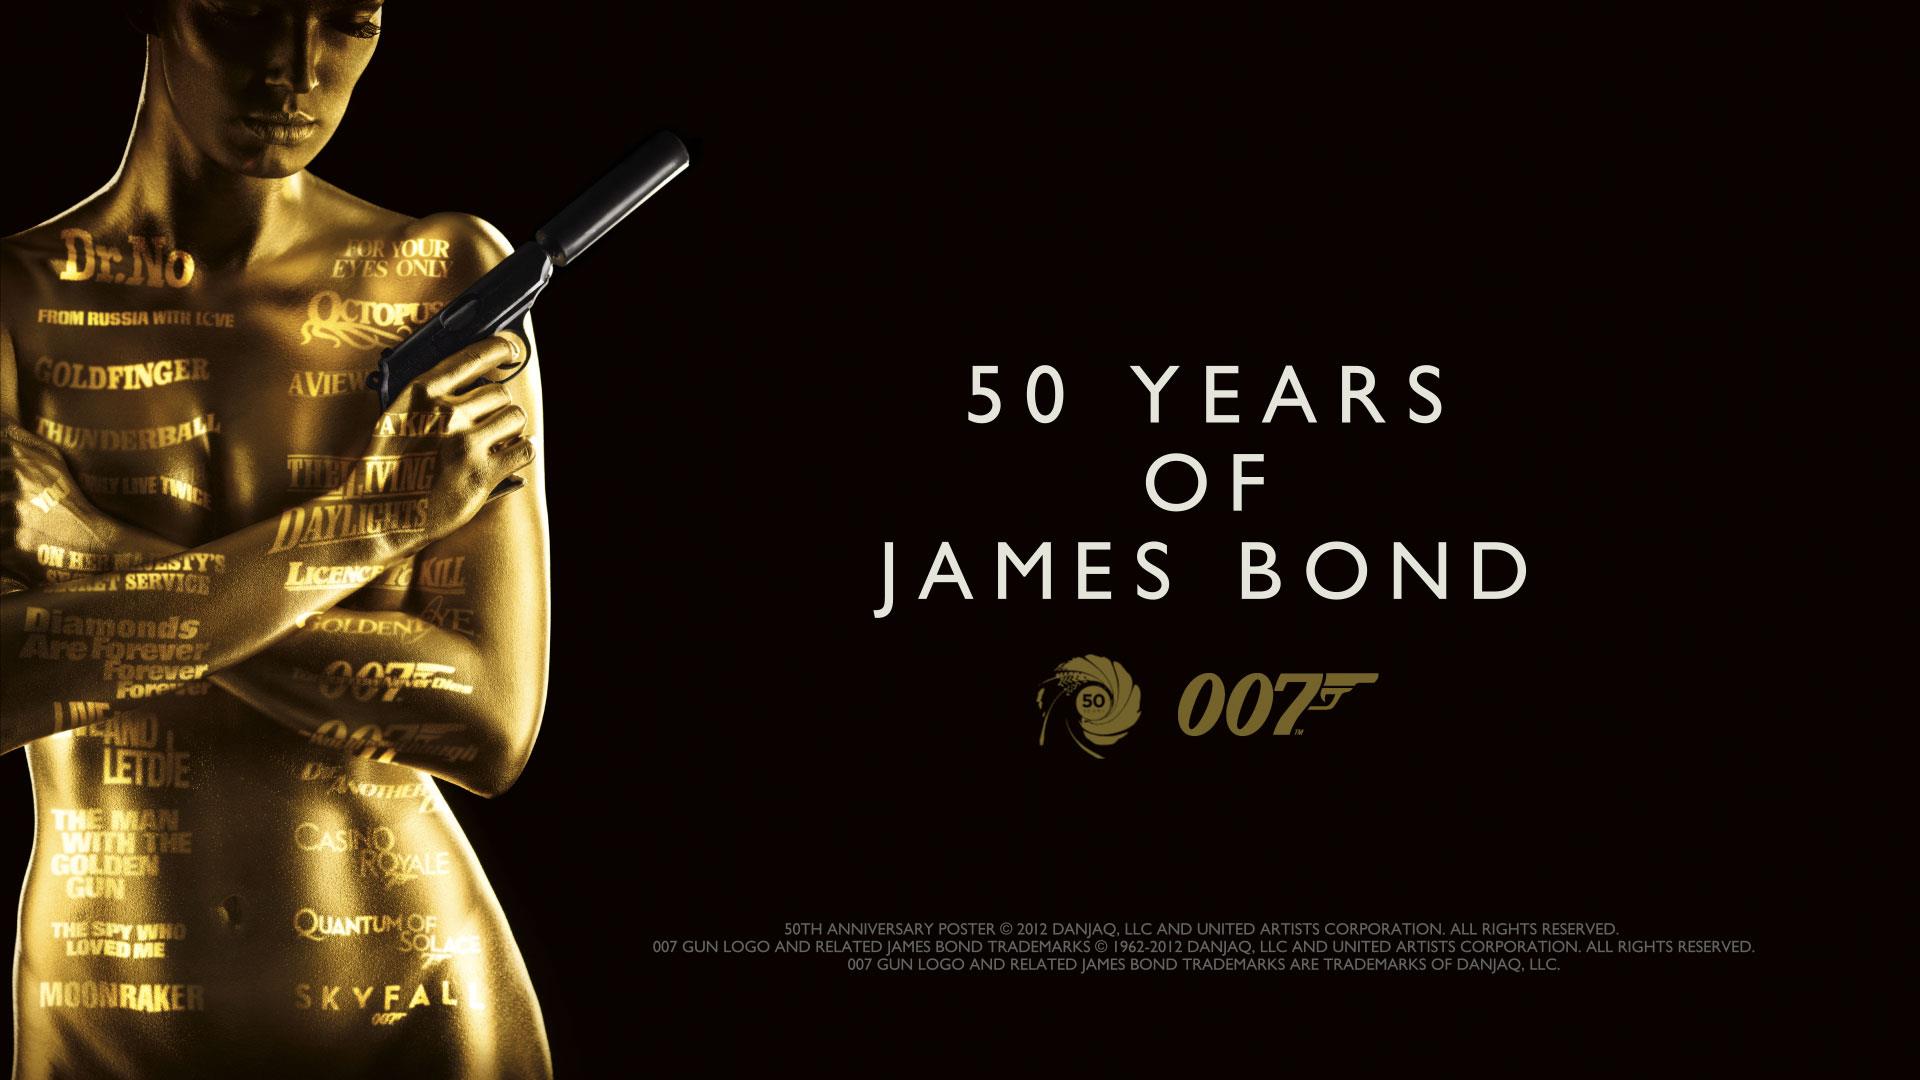 Free James Bond Hd Wallpaper James Bond Hd Wallpaper Download Wallpaperuse 1